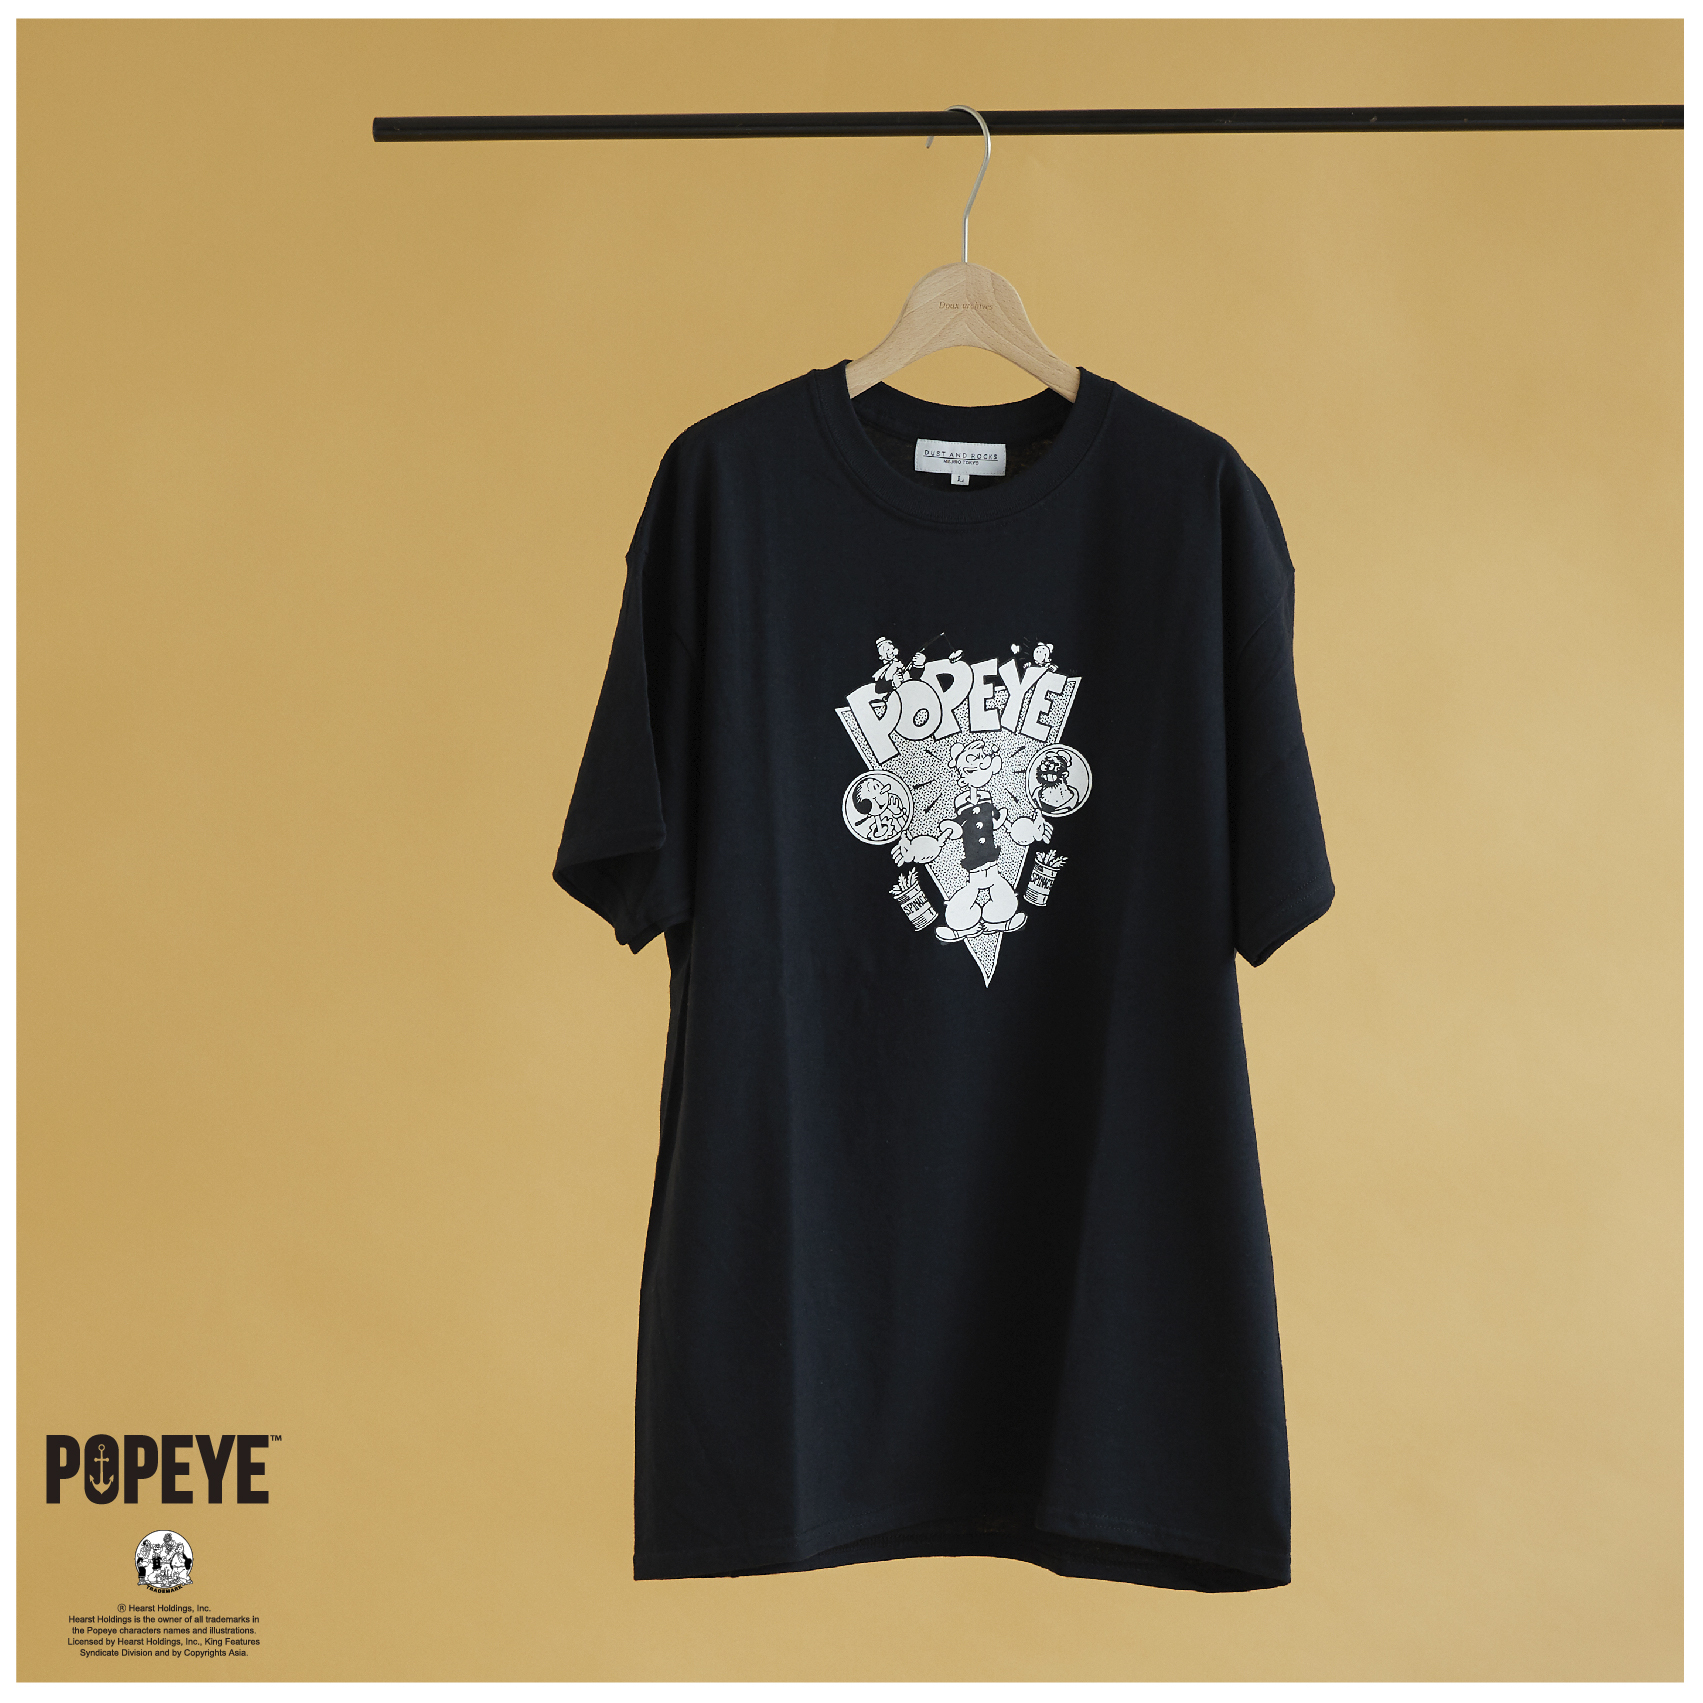 Popeye Dustandrocks Vintageイラスト Tシャツ T Shirt Dust And Rocks